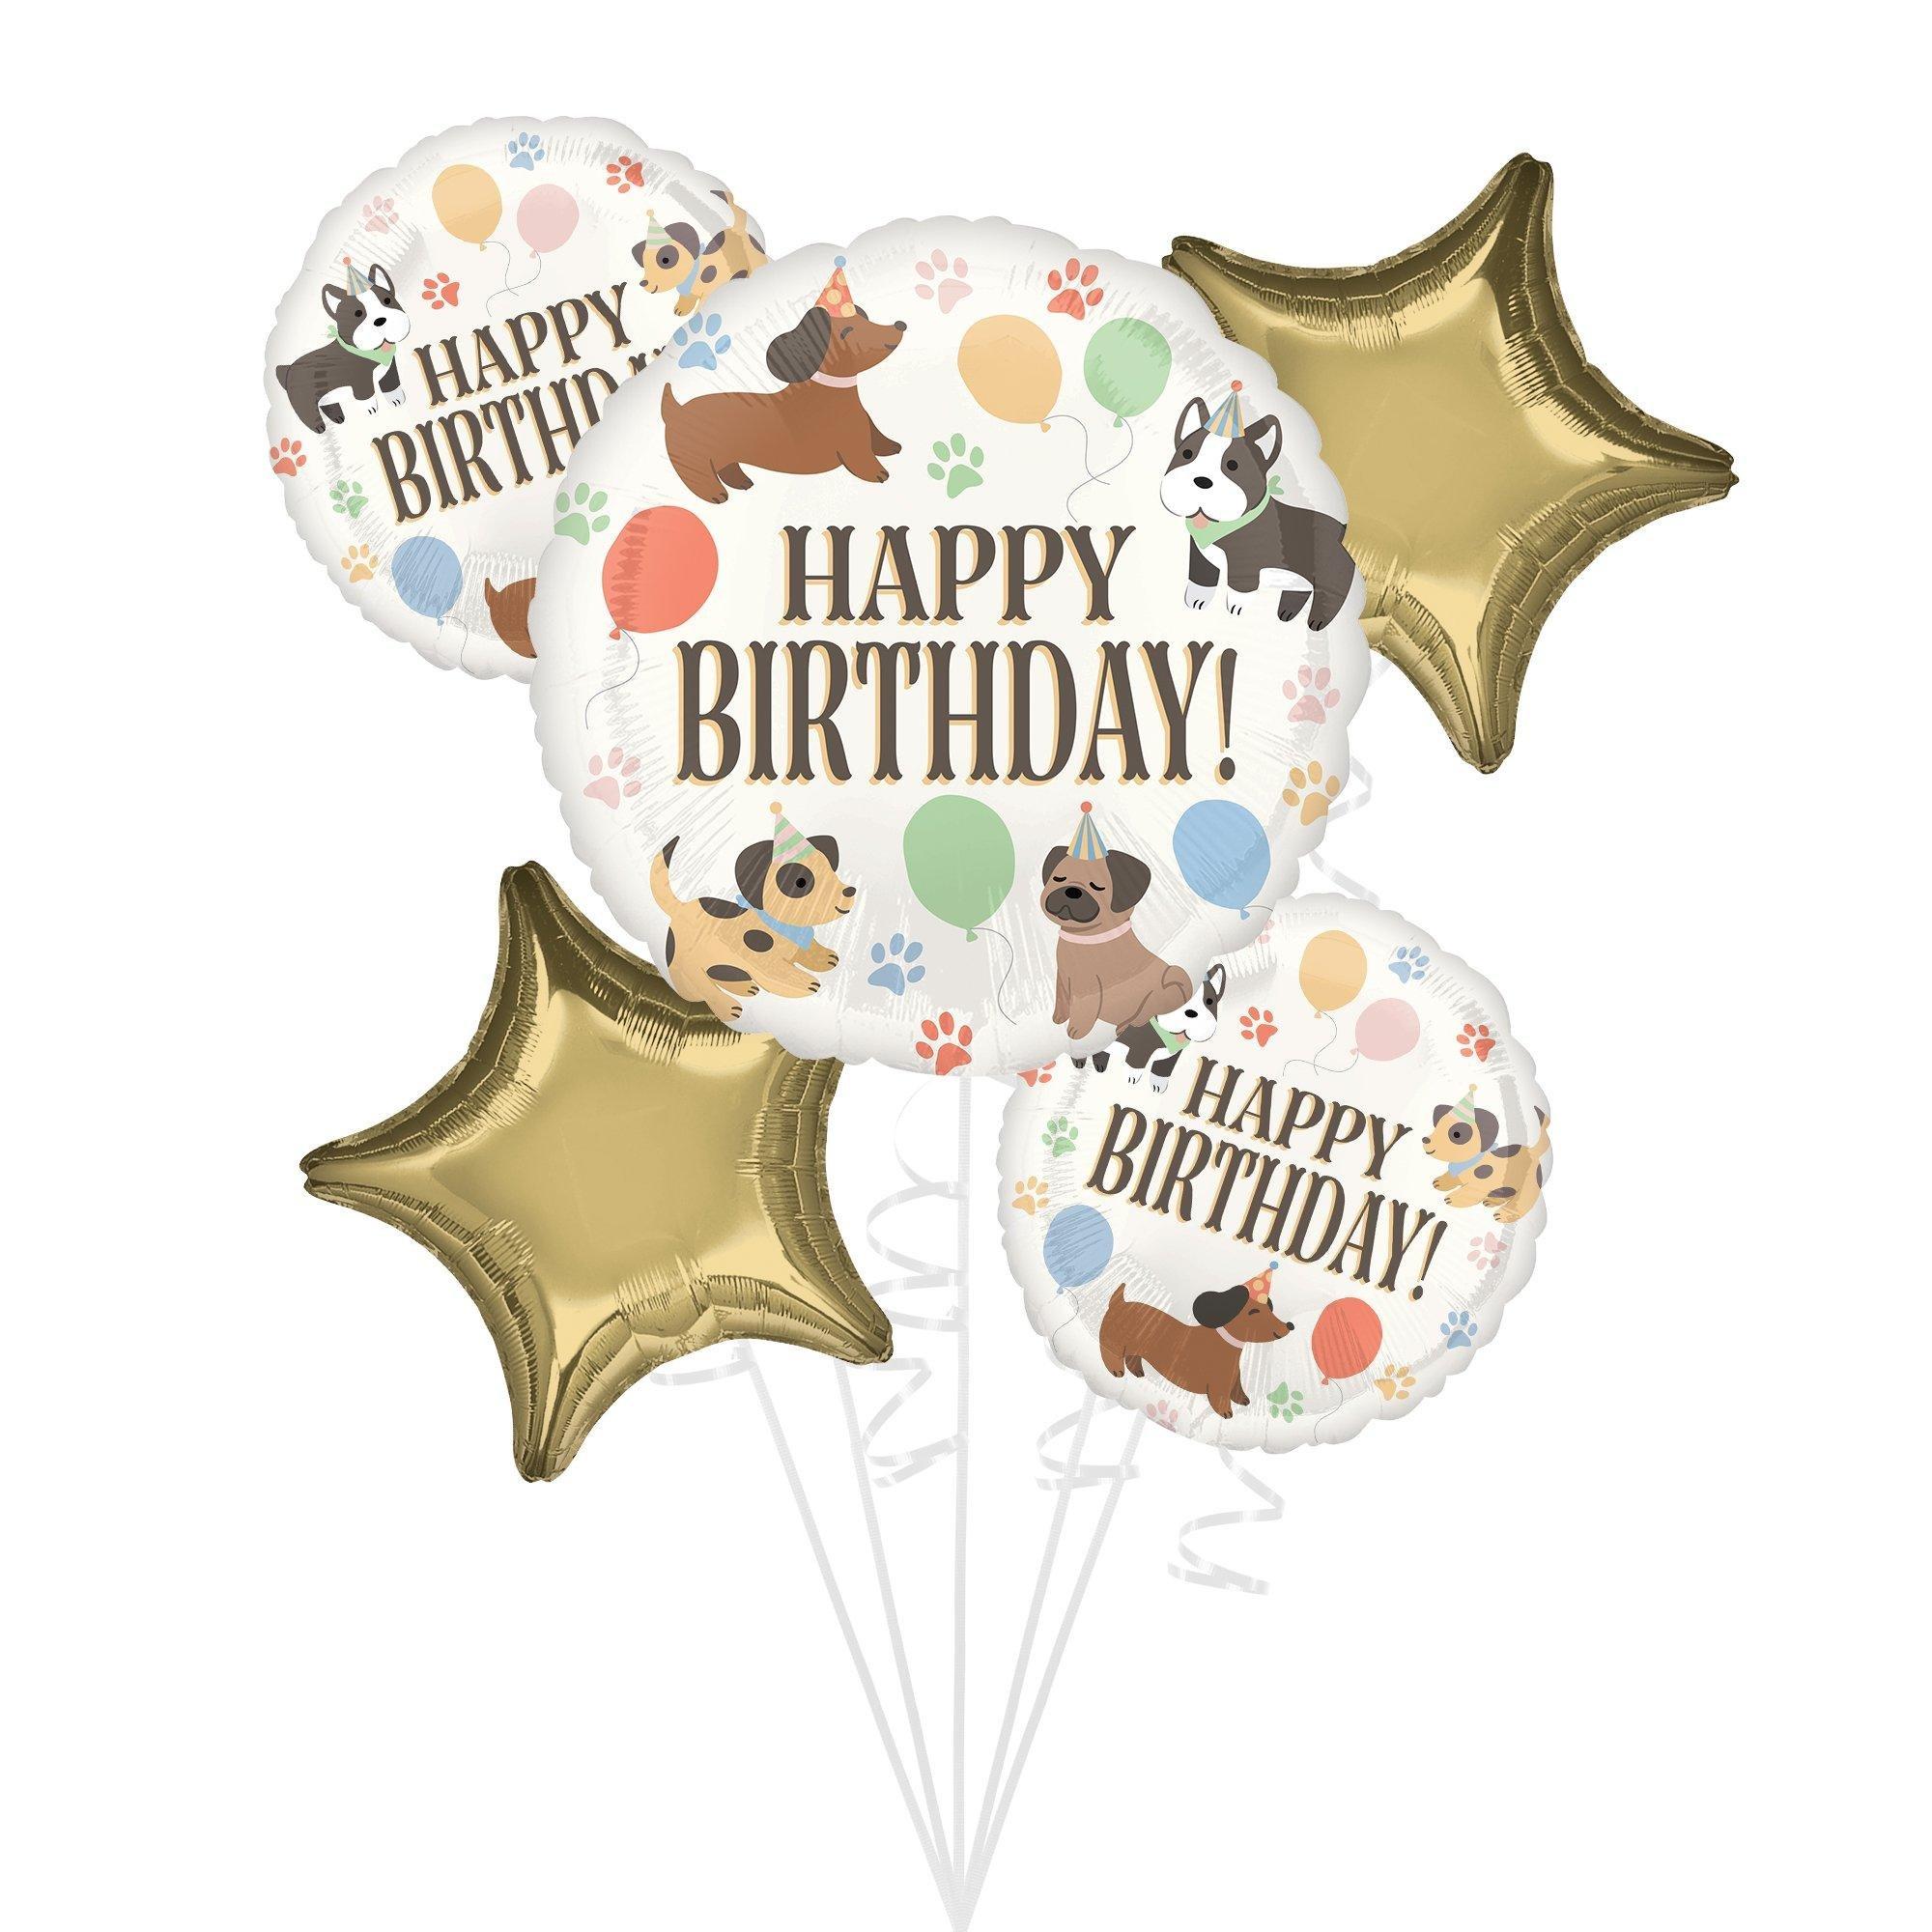 Premium Pawsome Birthday Foil Balloon Bouquet with Balloon Weight, 13pc